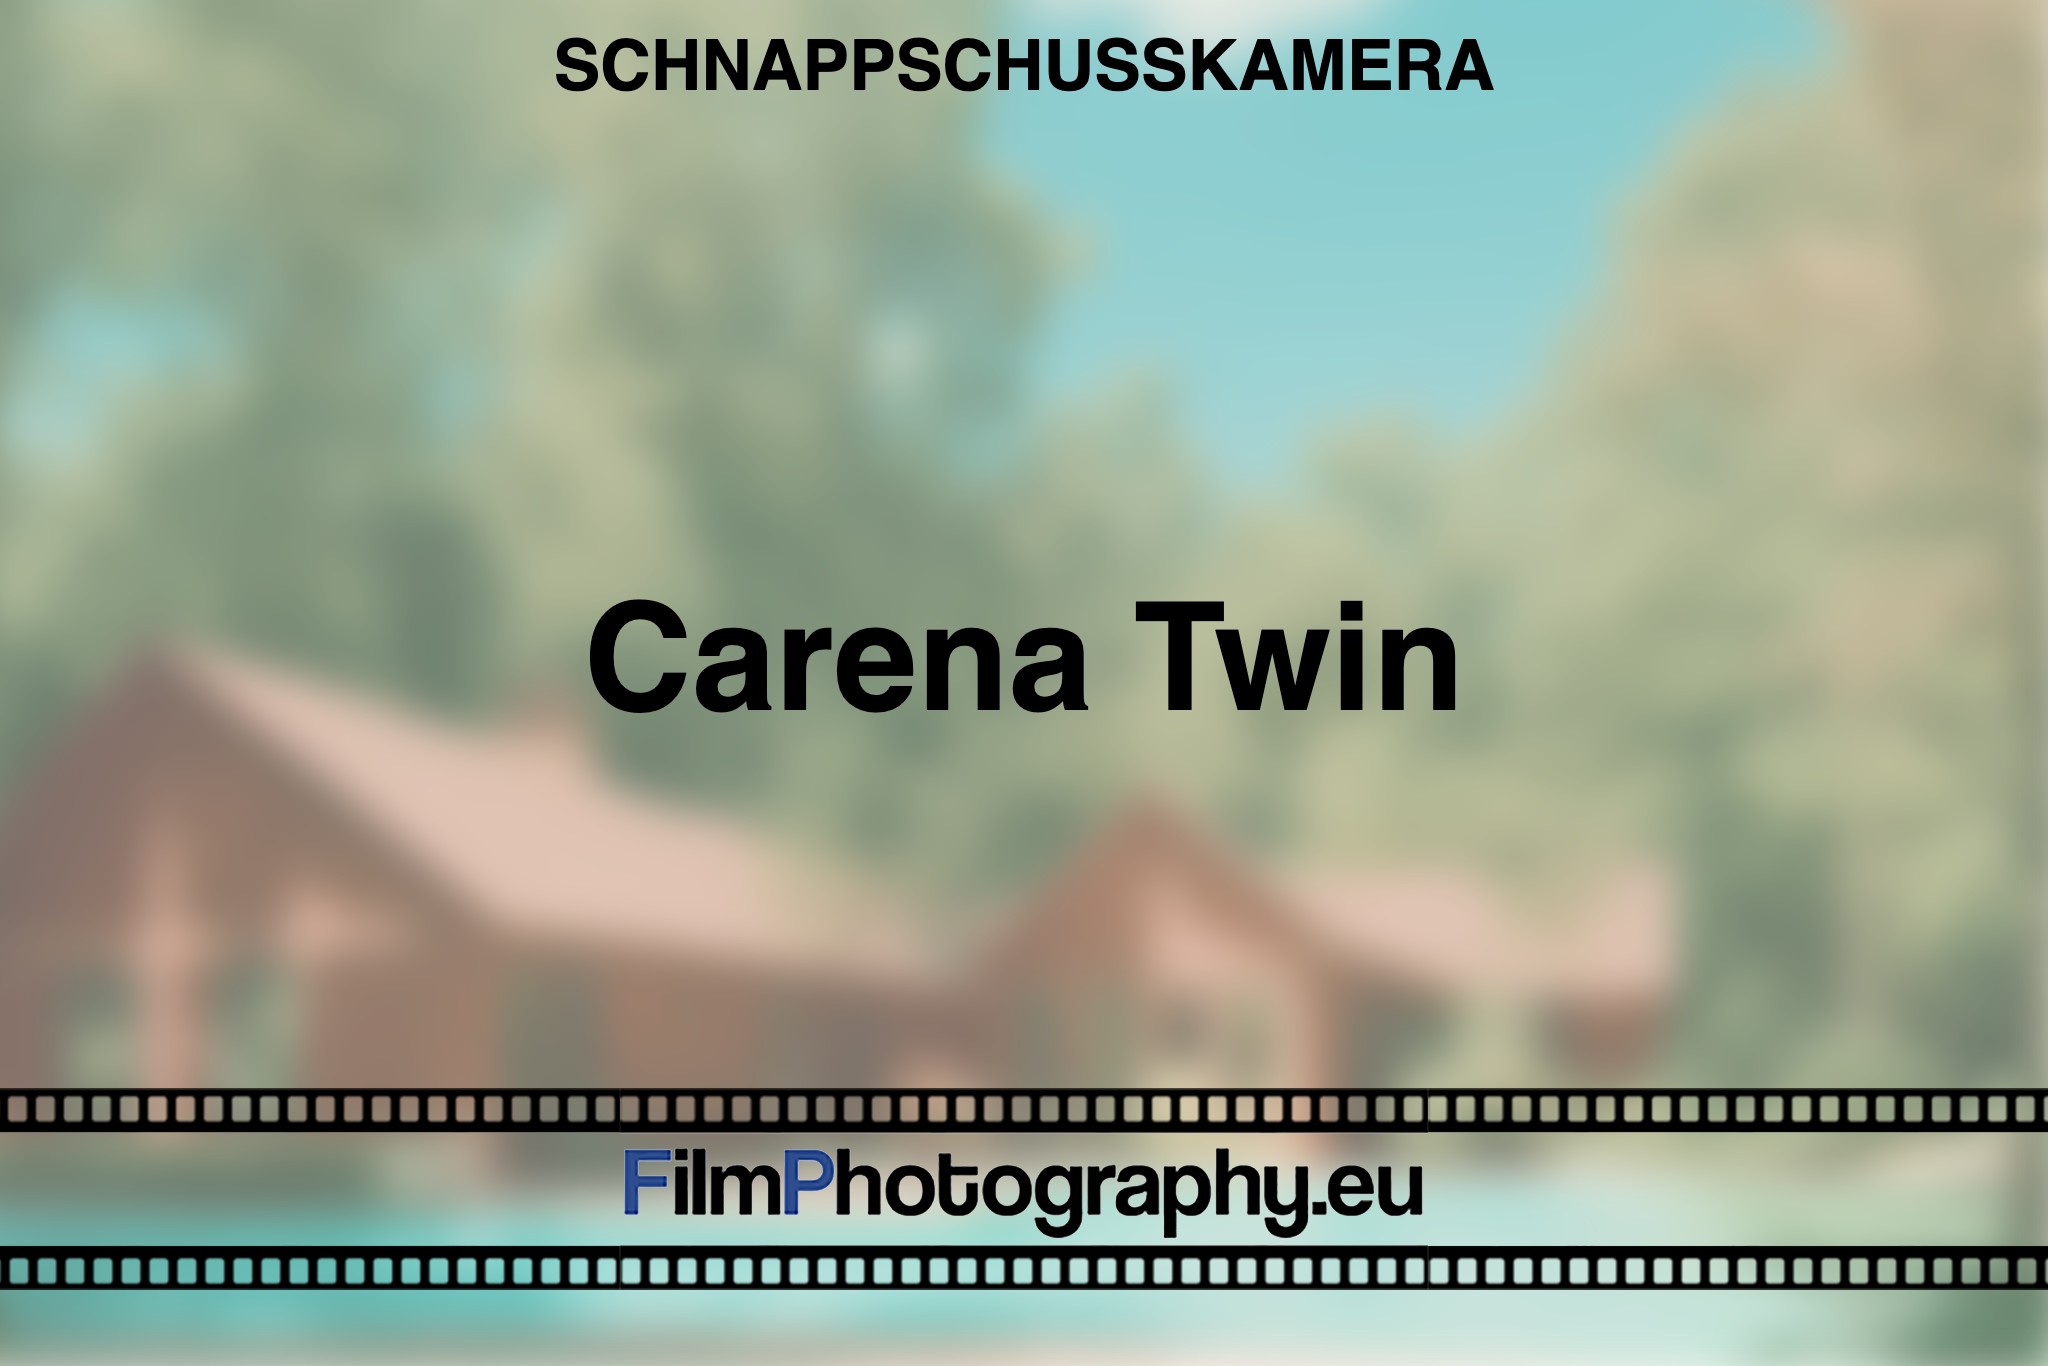 carena-twin-schnappschusskamera-bnv